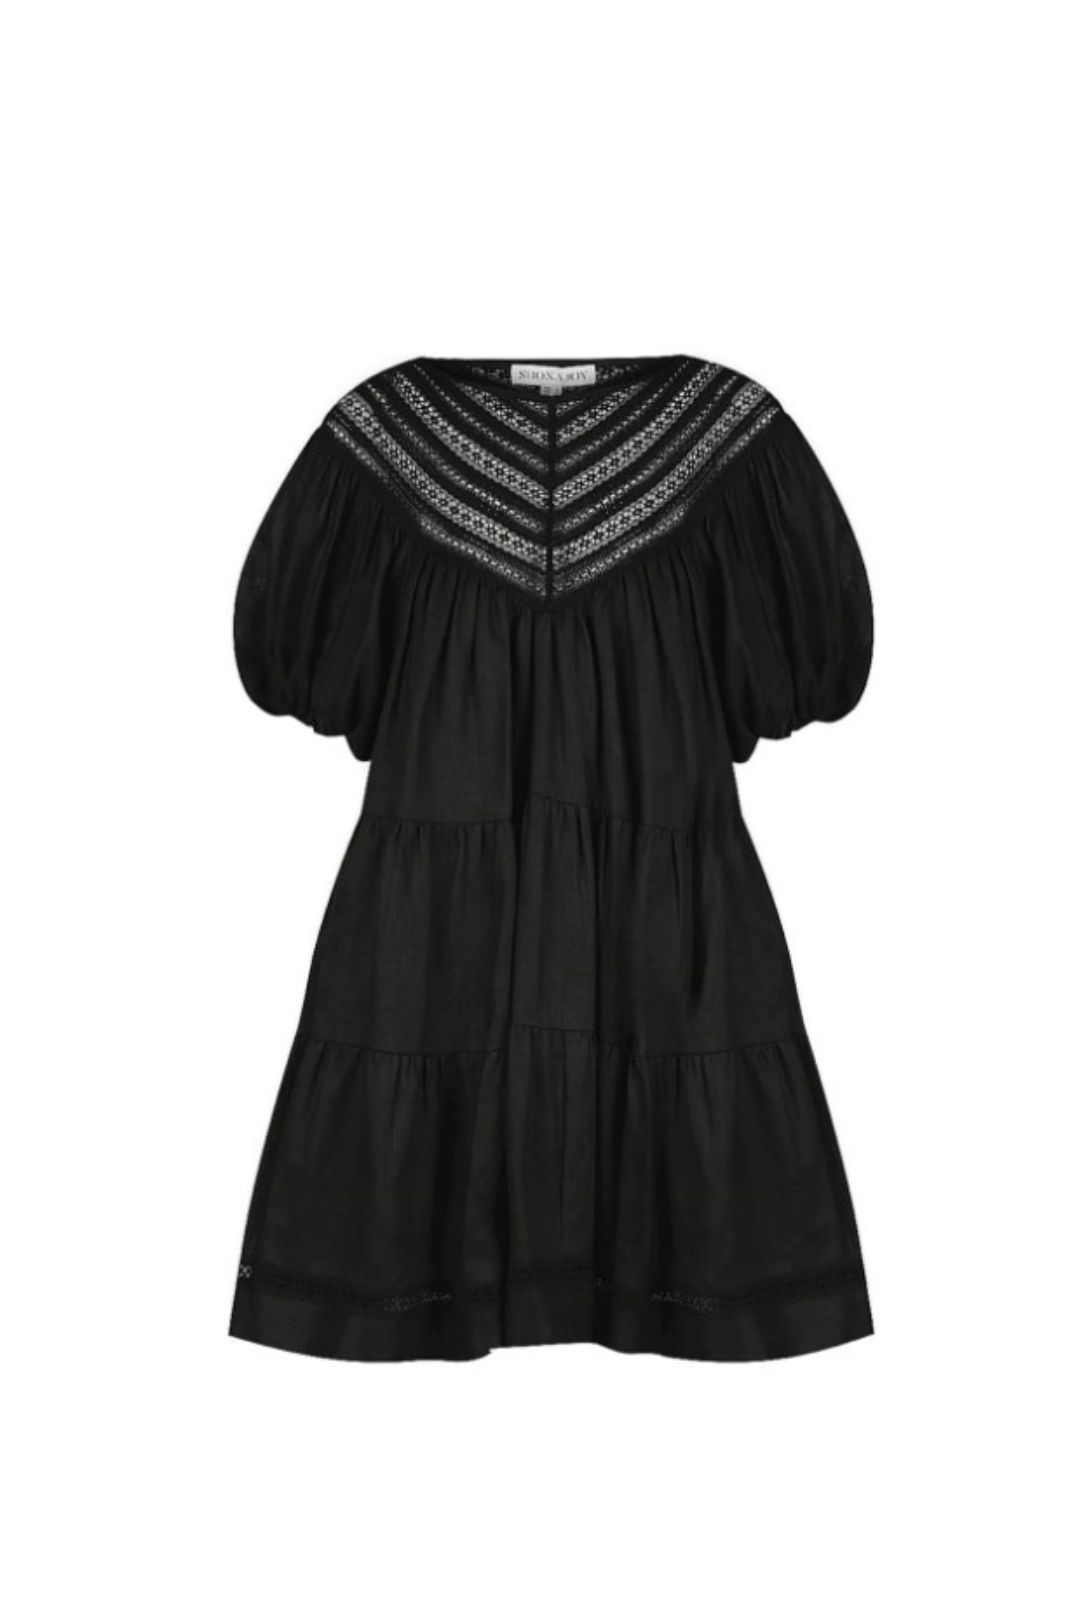 Shona Joy Adriana Mini Dress in Black